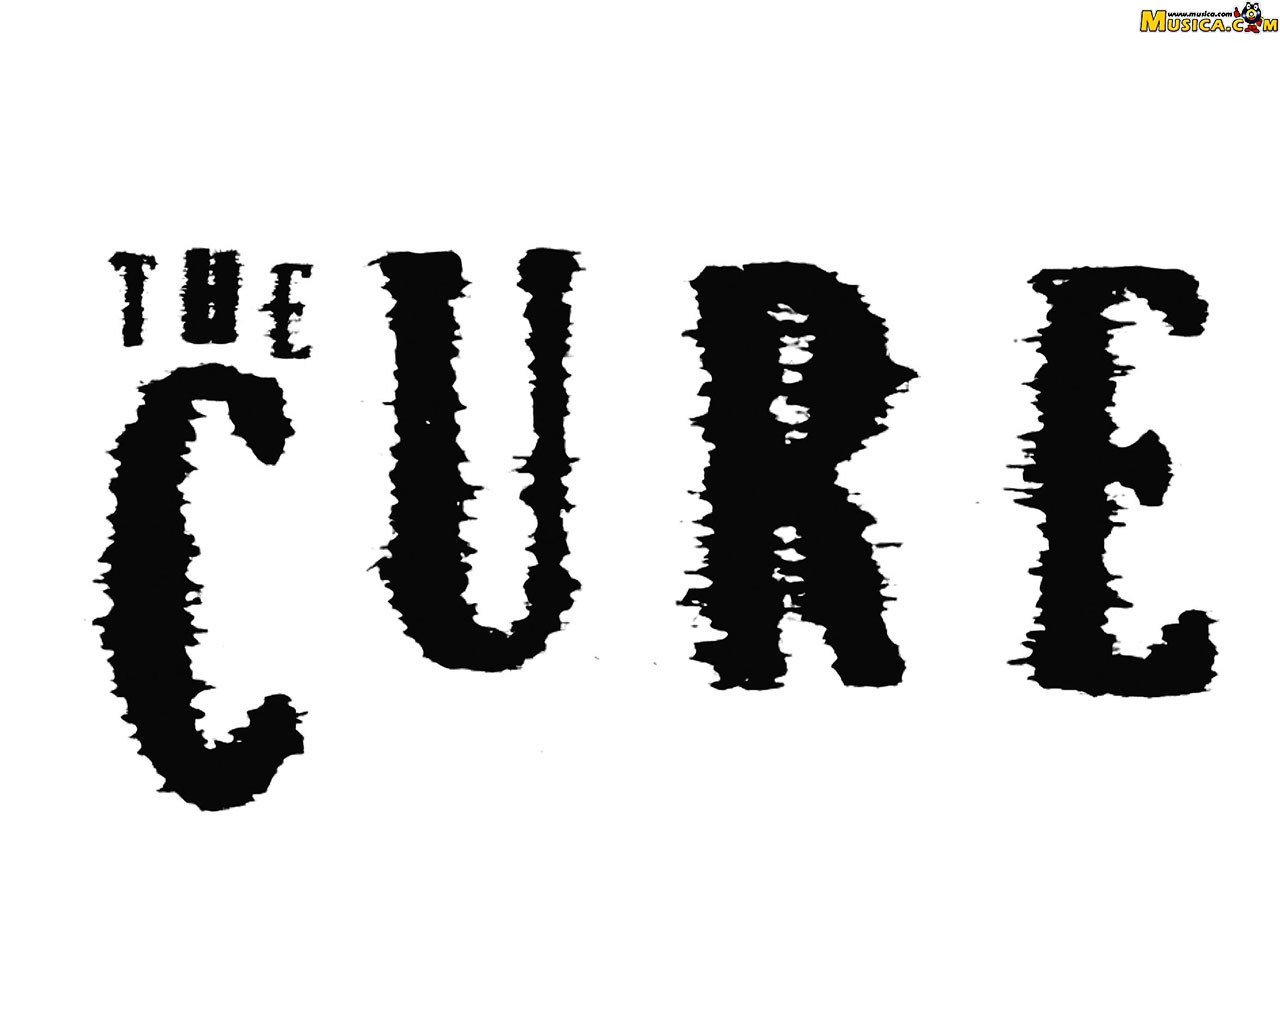 Fondo de pantalla de The Cure